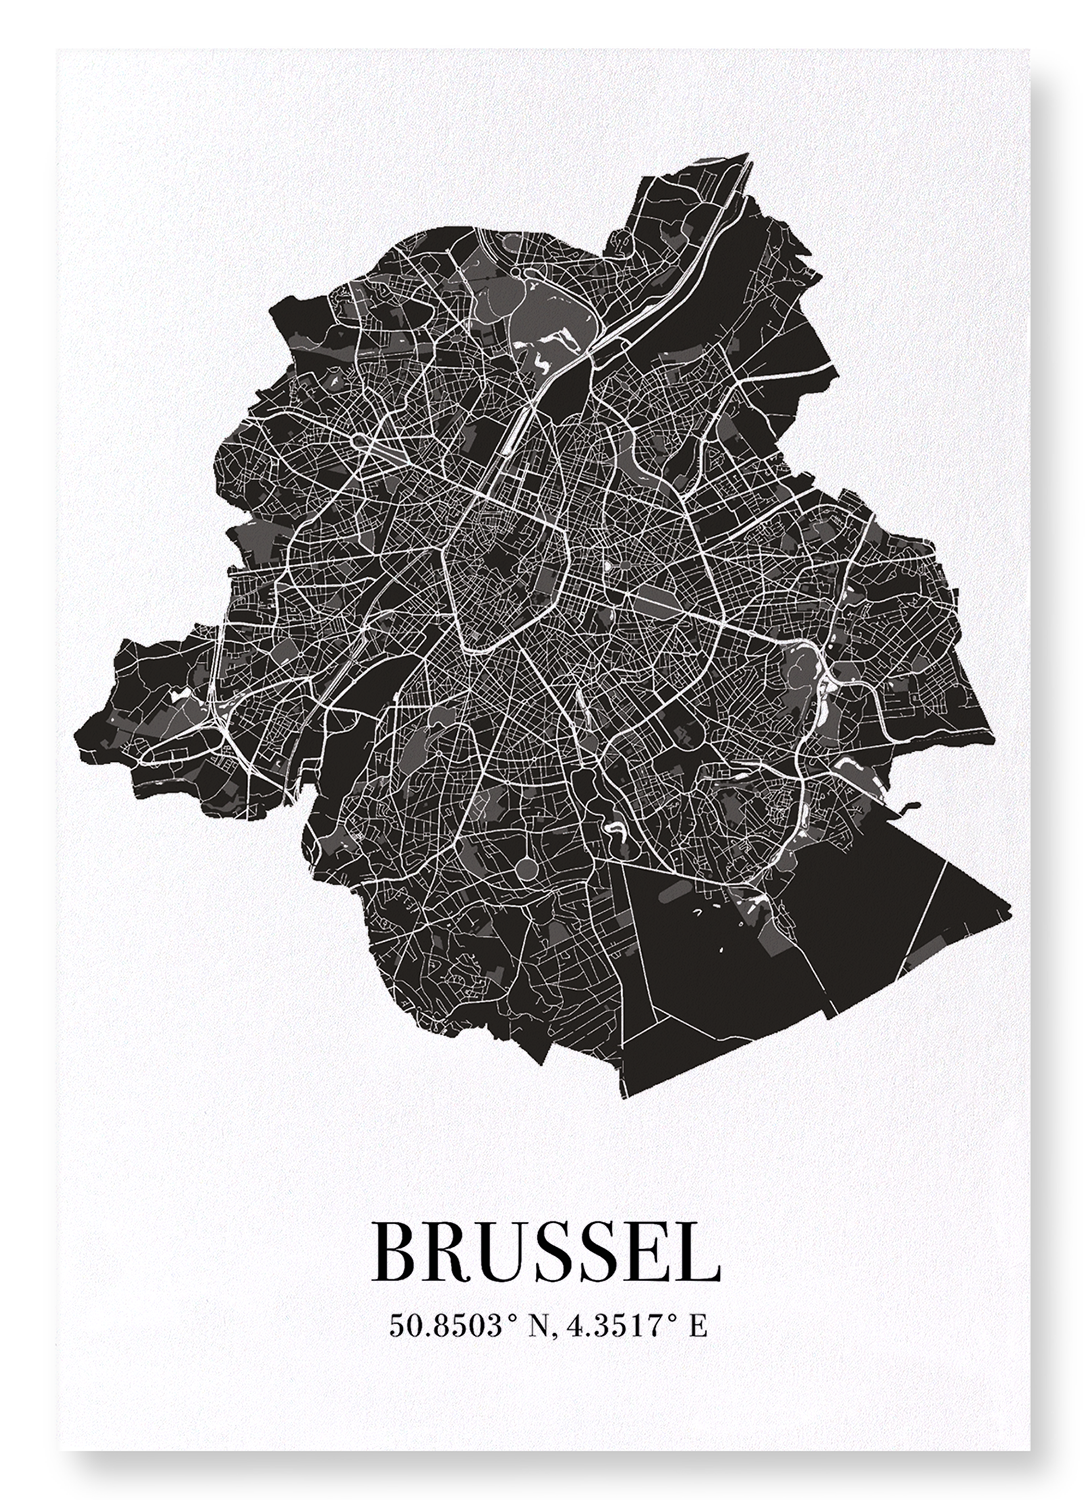 BRUSSELS CUTOUT: Map Cutout Art Print